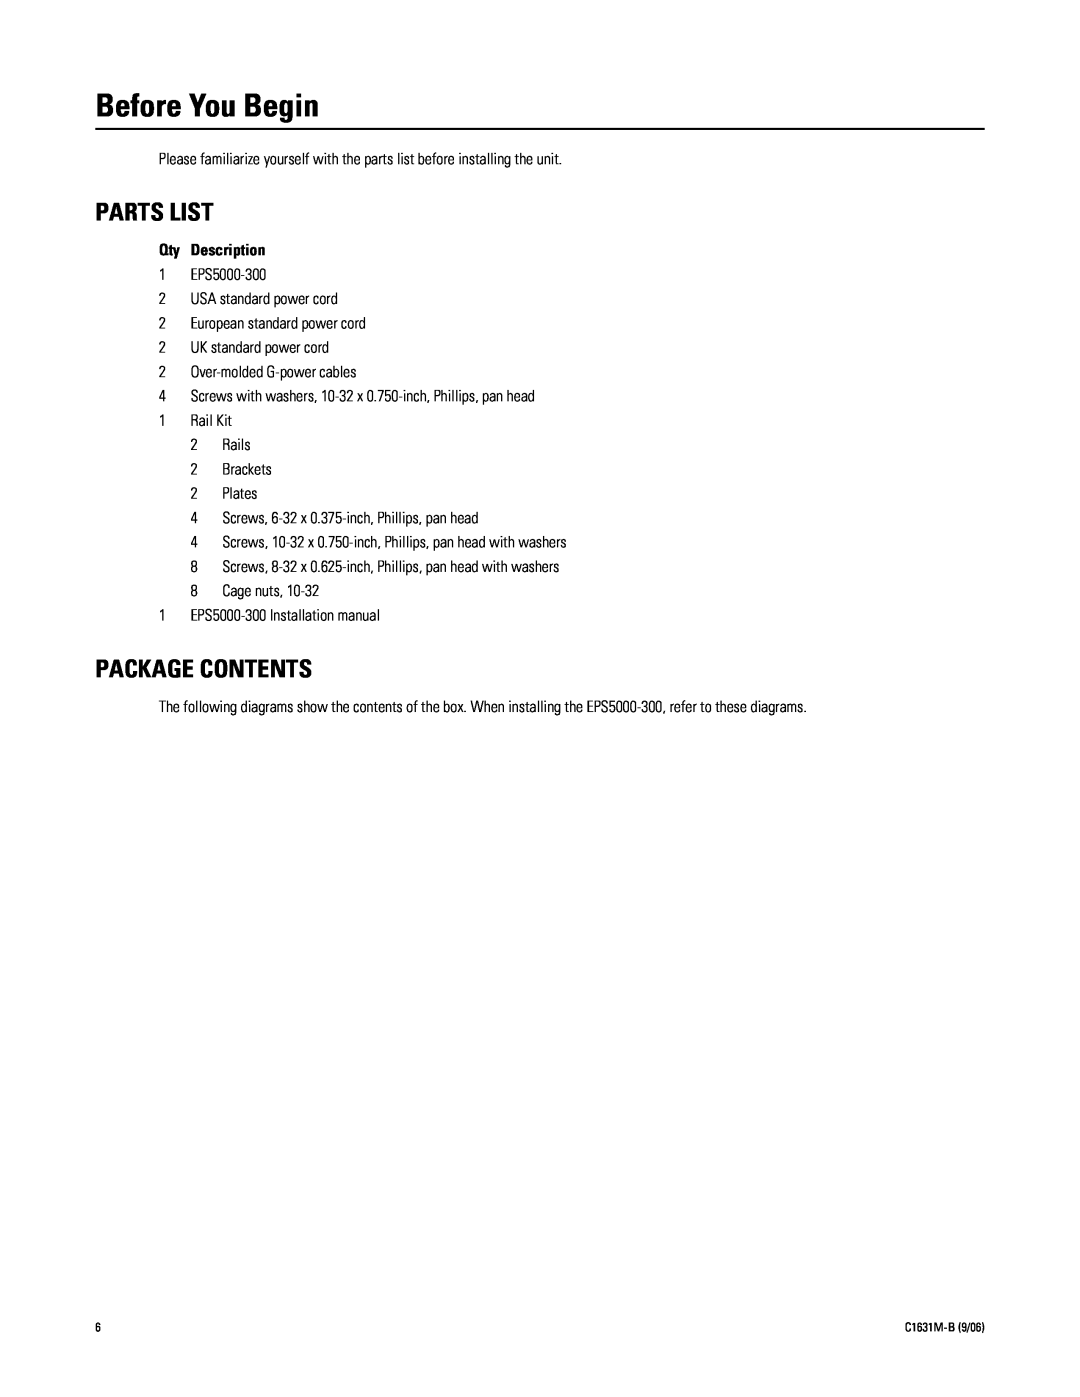 Pelco EPS5000-300 manual Before You Begin, Parts List, Package Contents, Qty Description 